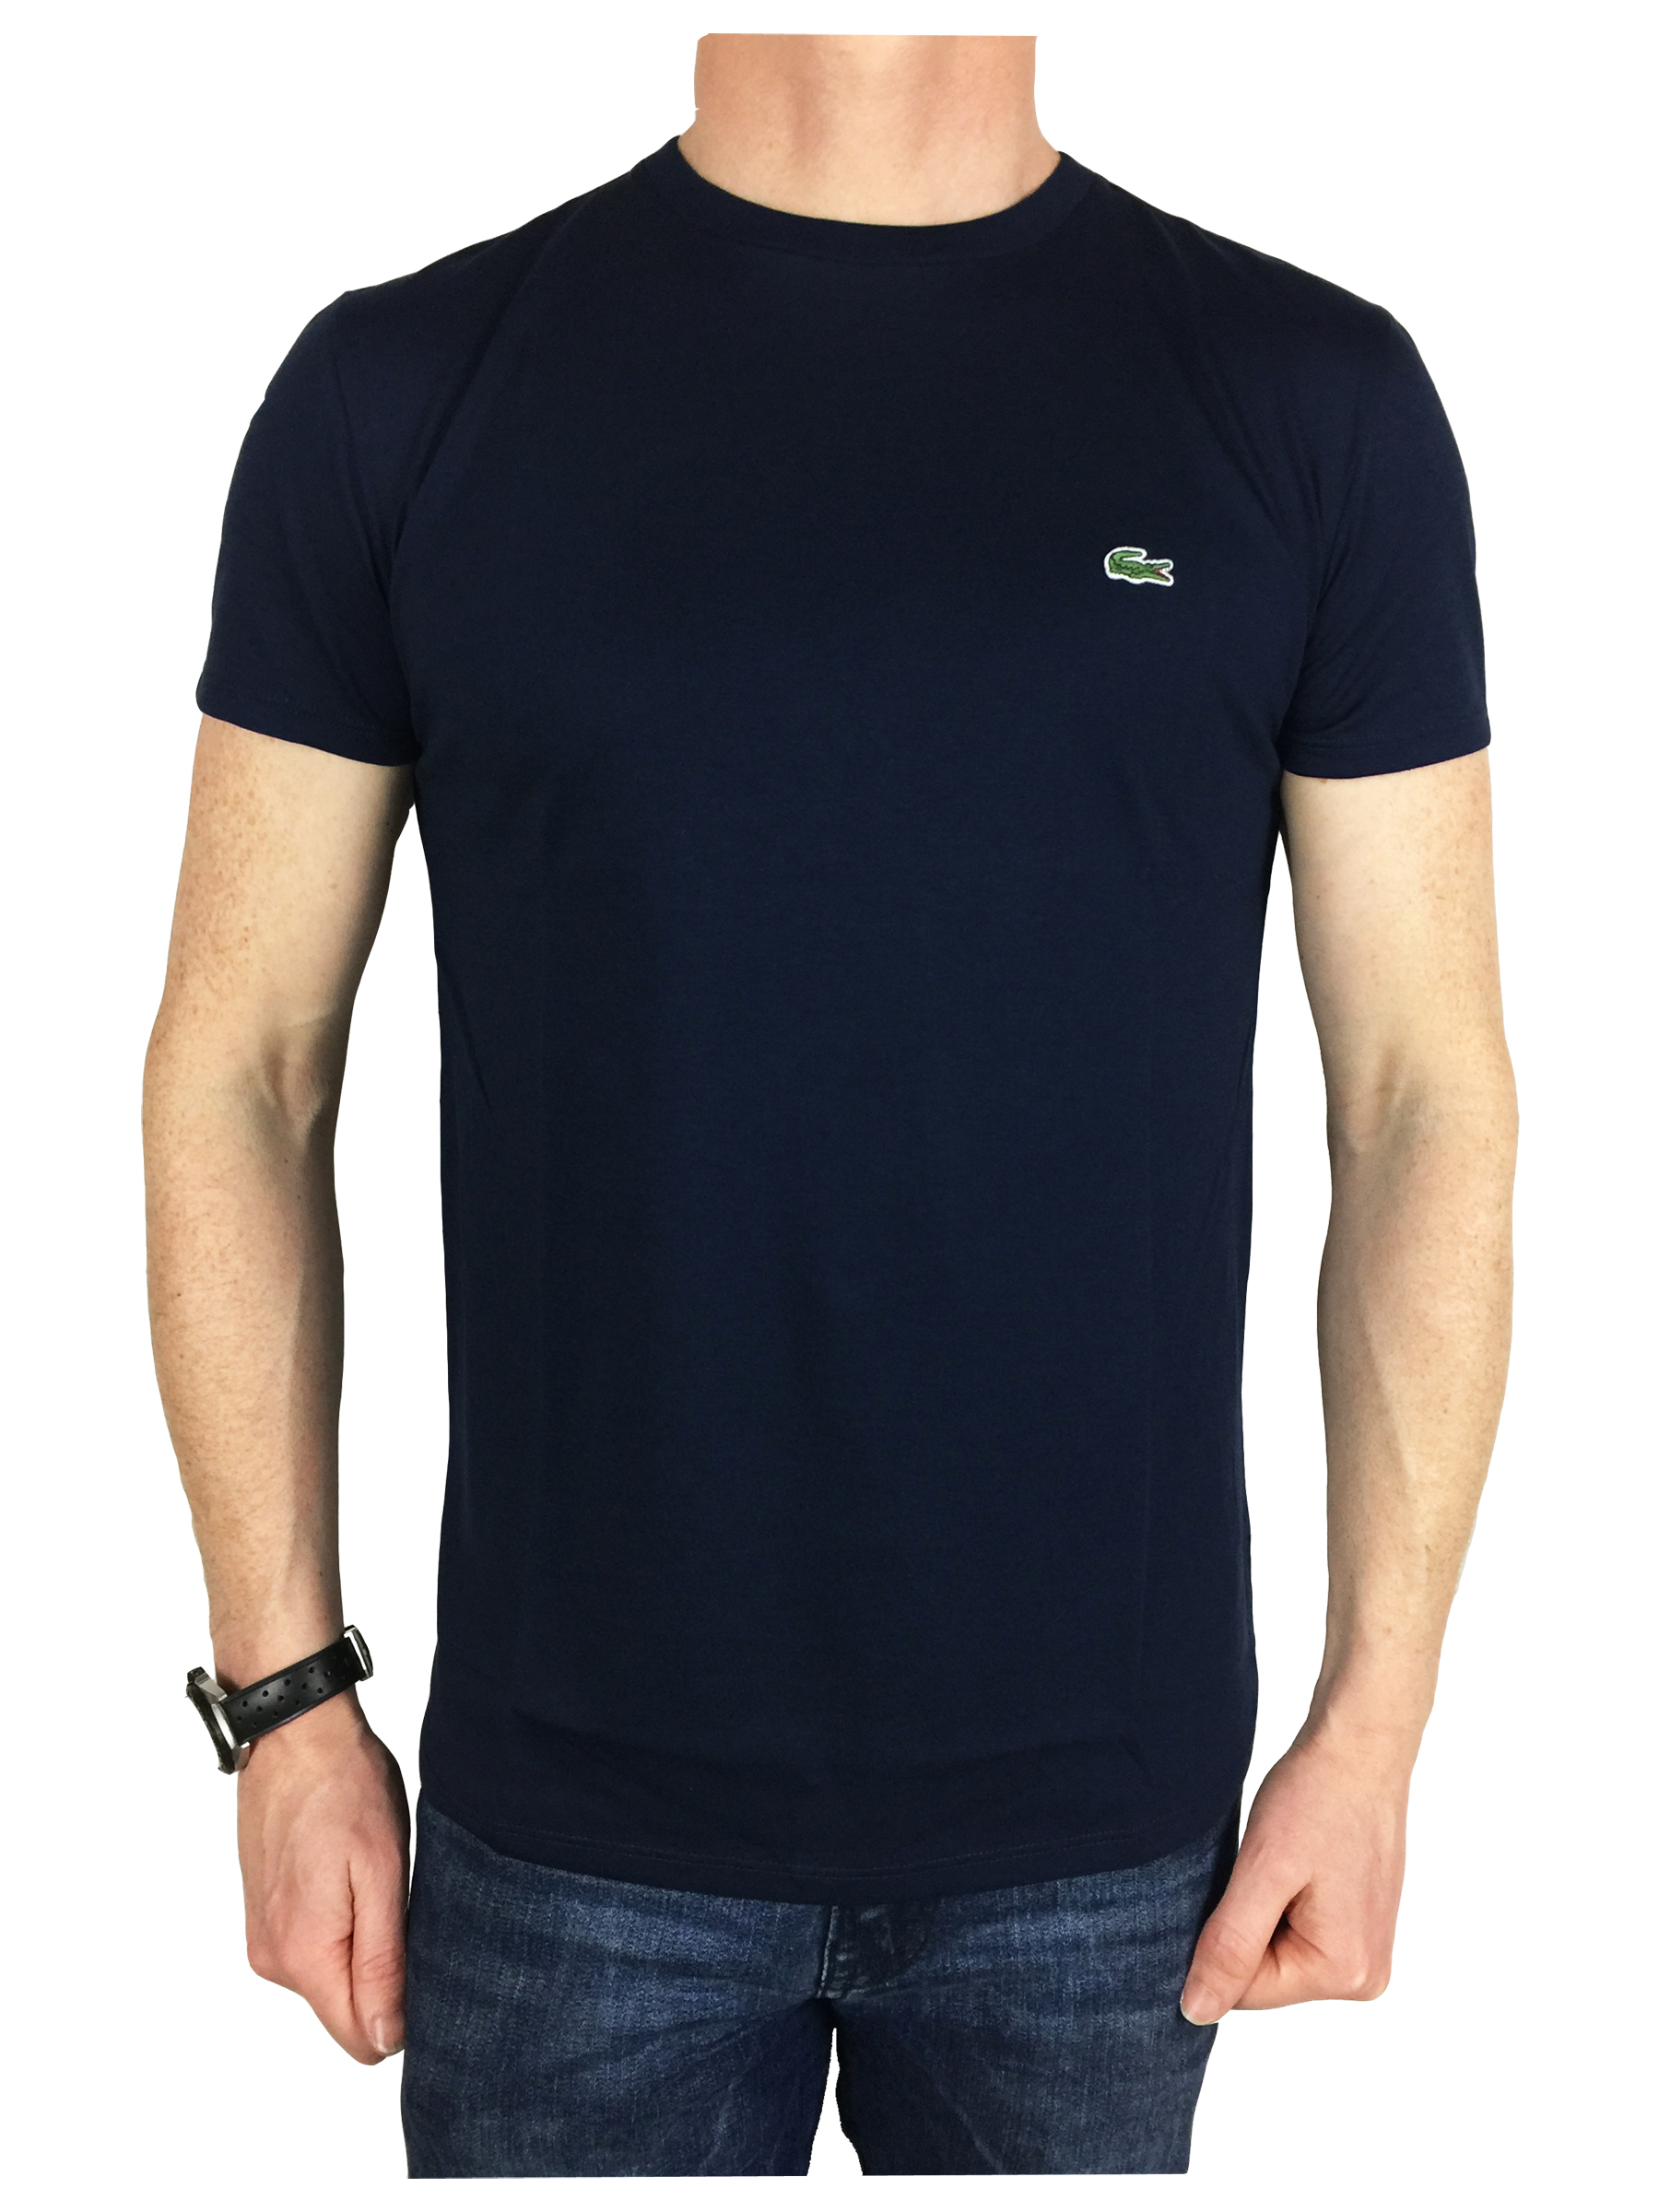 Lacoste Th6709 Crew Neck T-shirt Navy 4 sale online | eBay